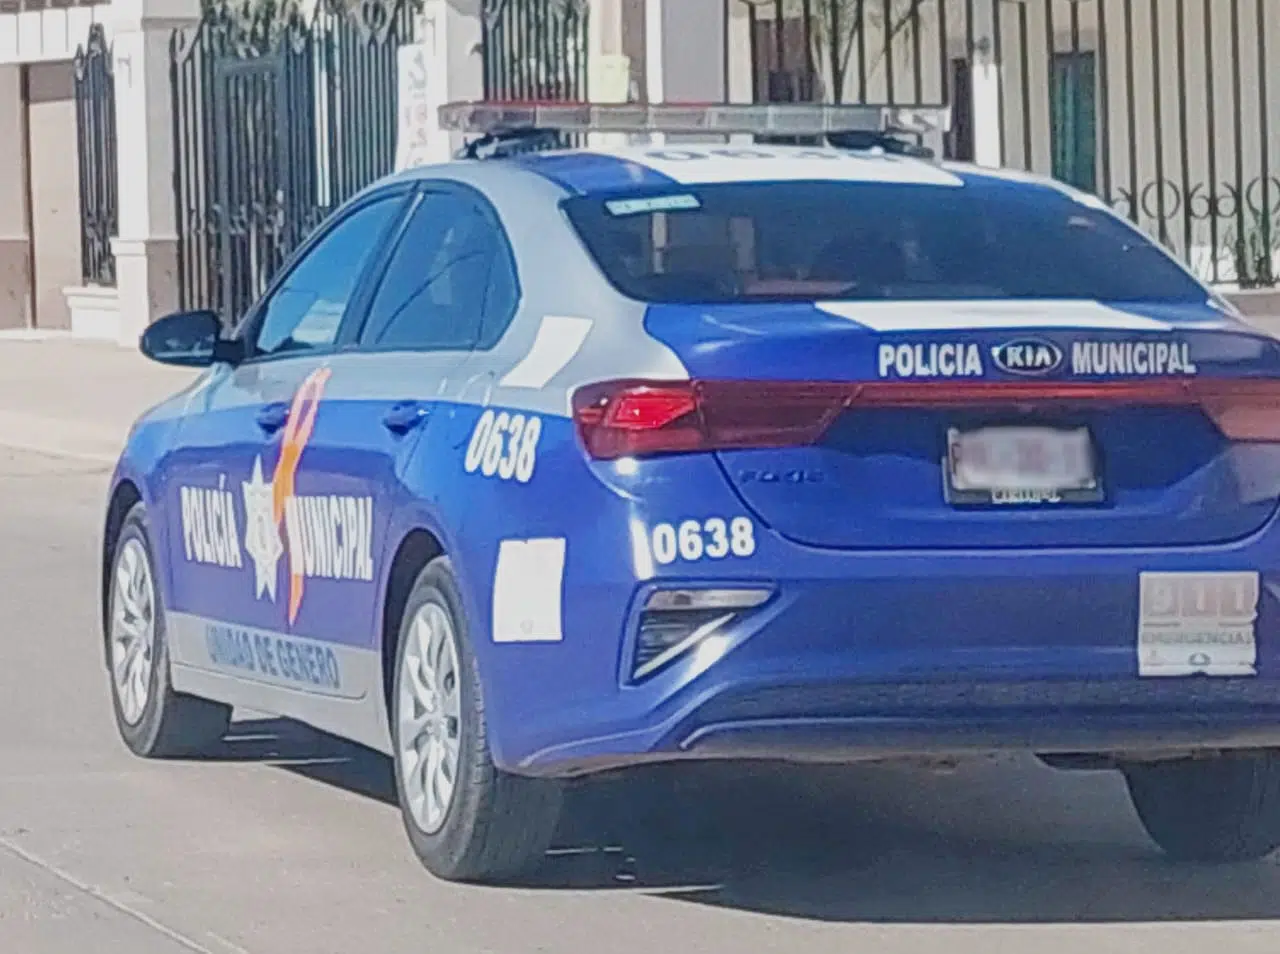 Patrulla de la policia municipal de Guasave